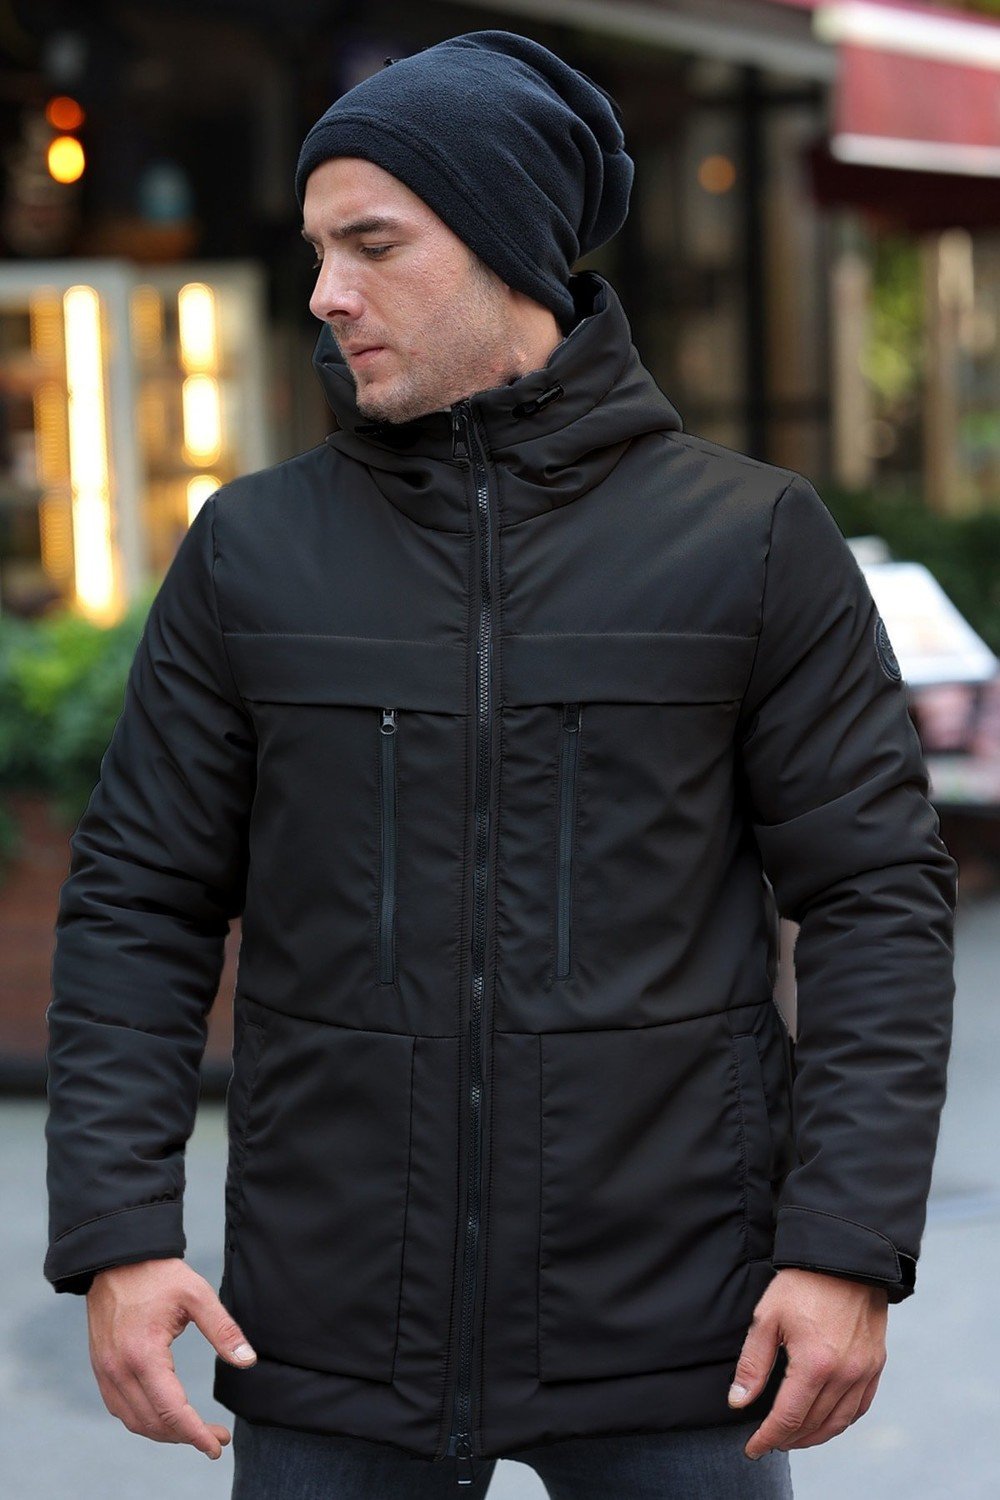 D1fference Men's Black Fleece Water And Windproof Hooded Winter Jacket & Coat & Parka.